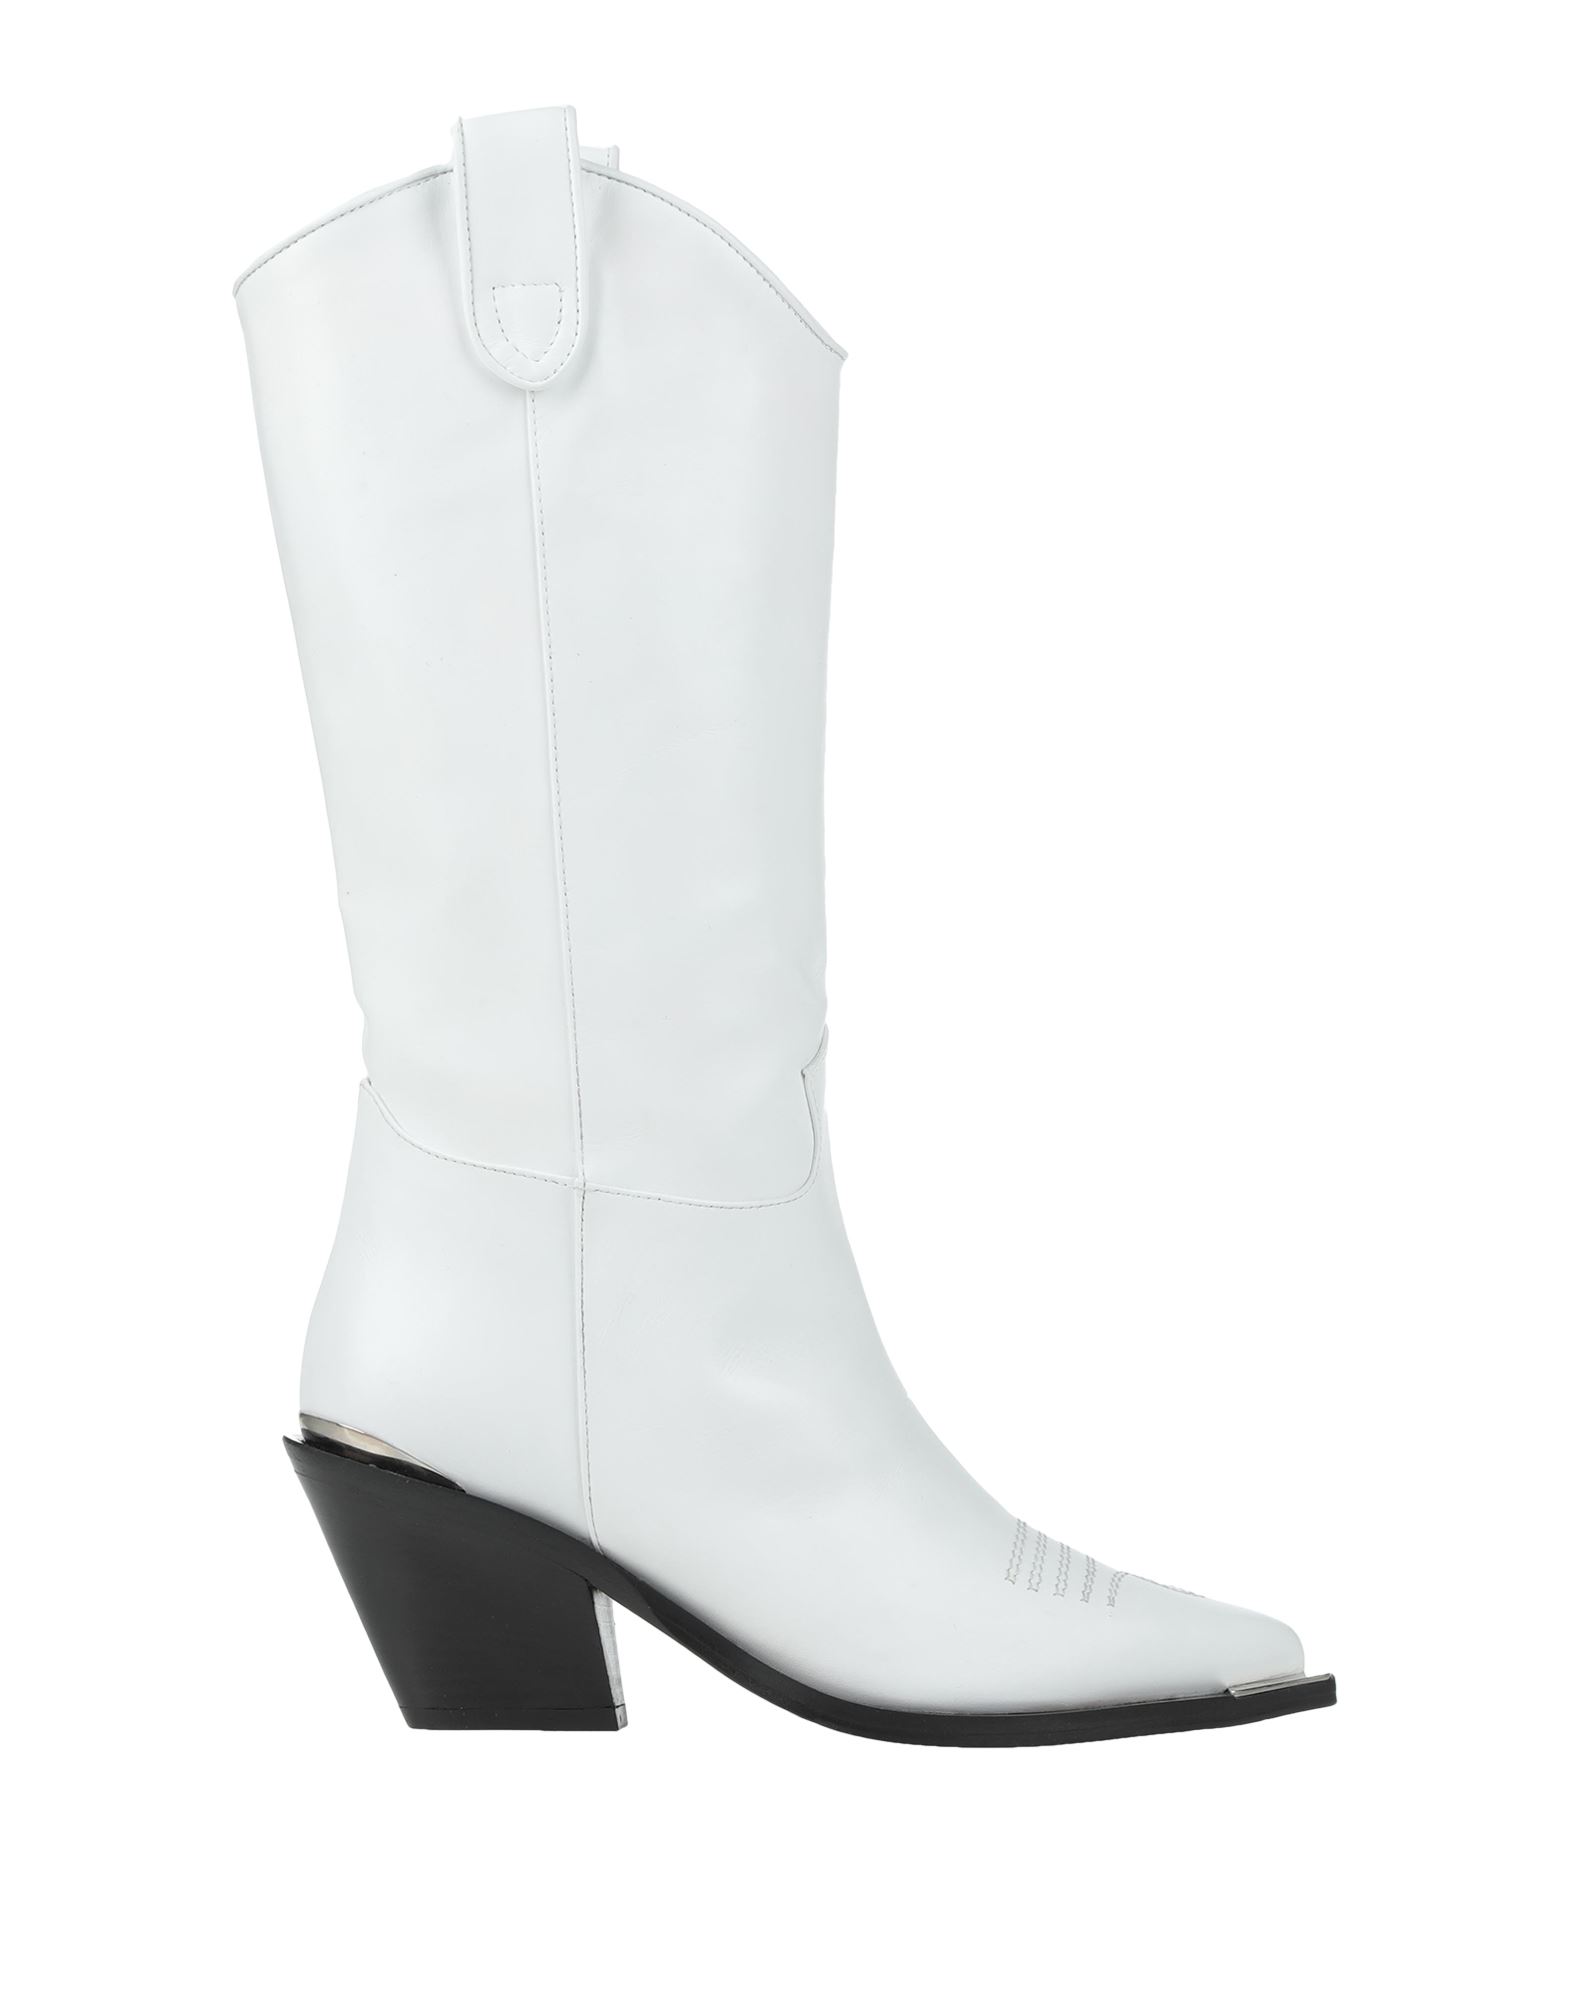 Aldo Castagna For Shabby Chic Knee Boots In White